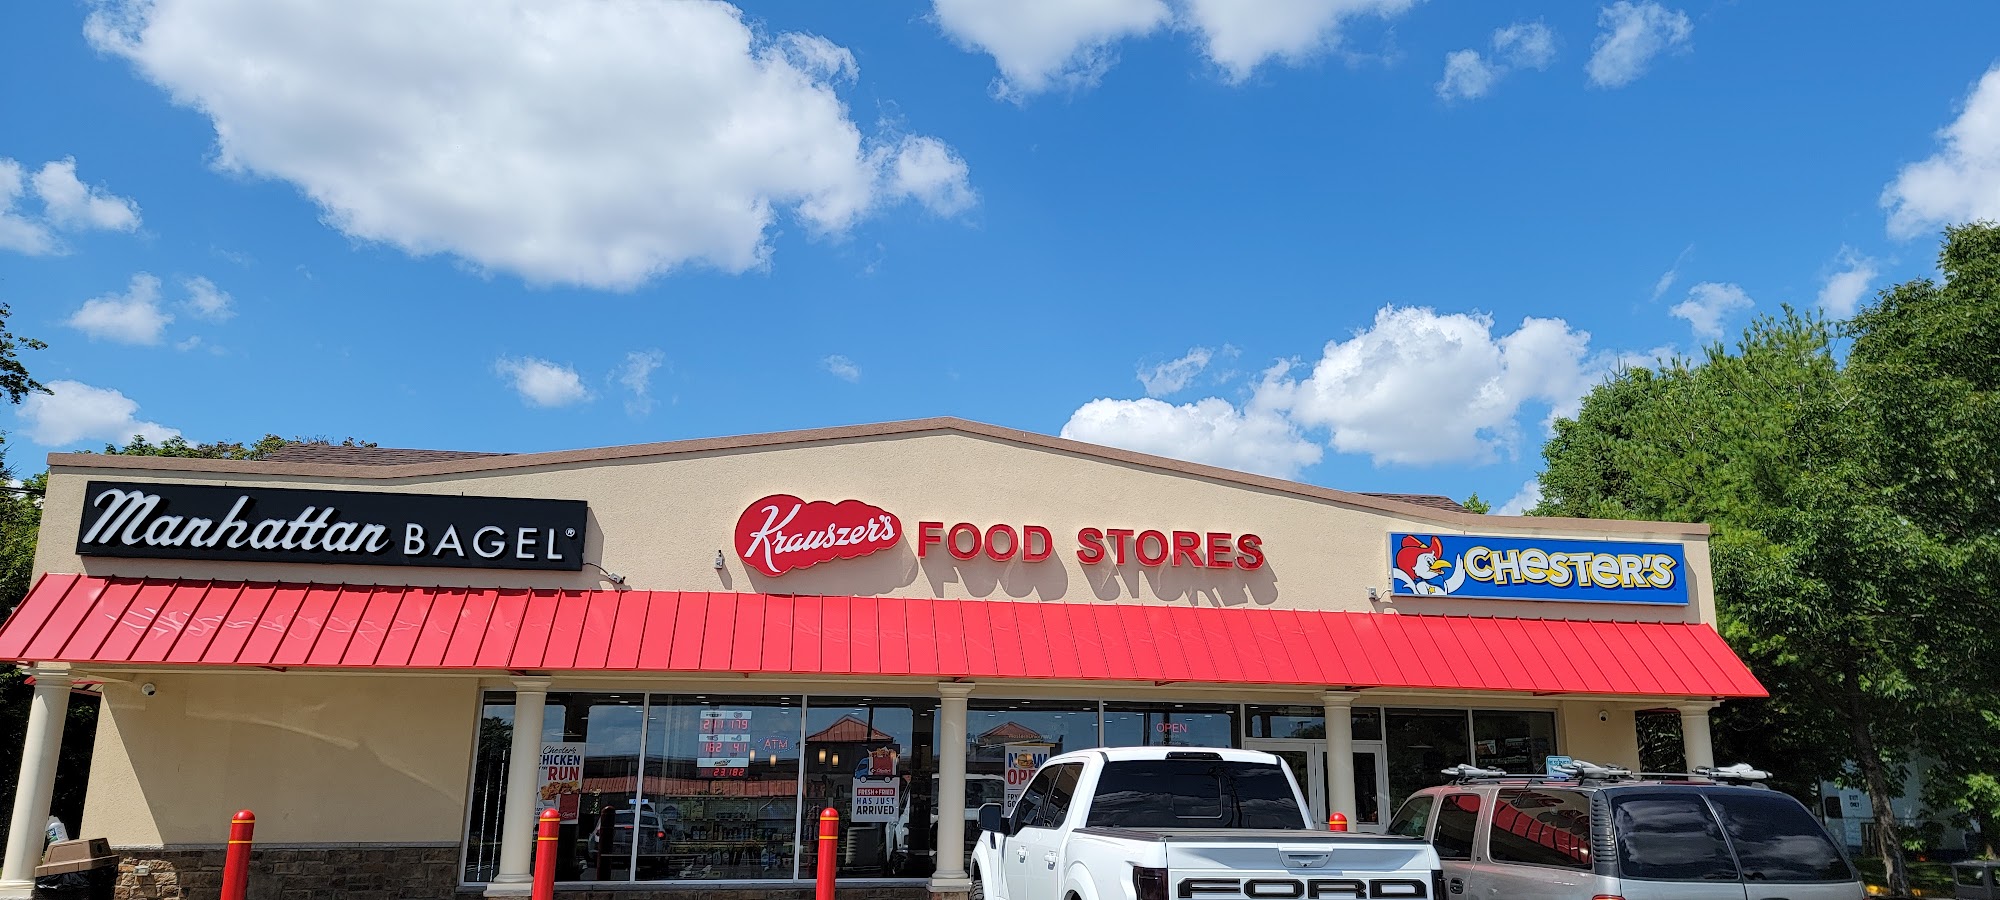 Krauszer's Food Stores